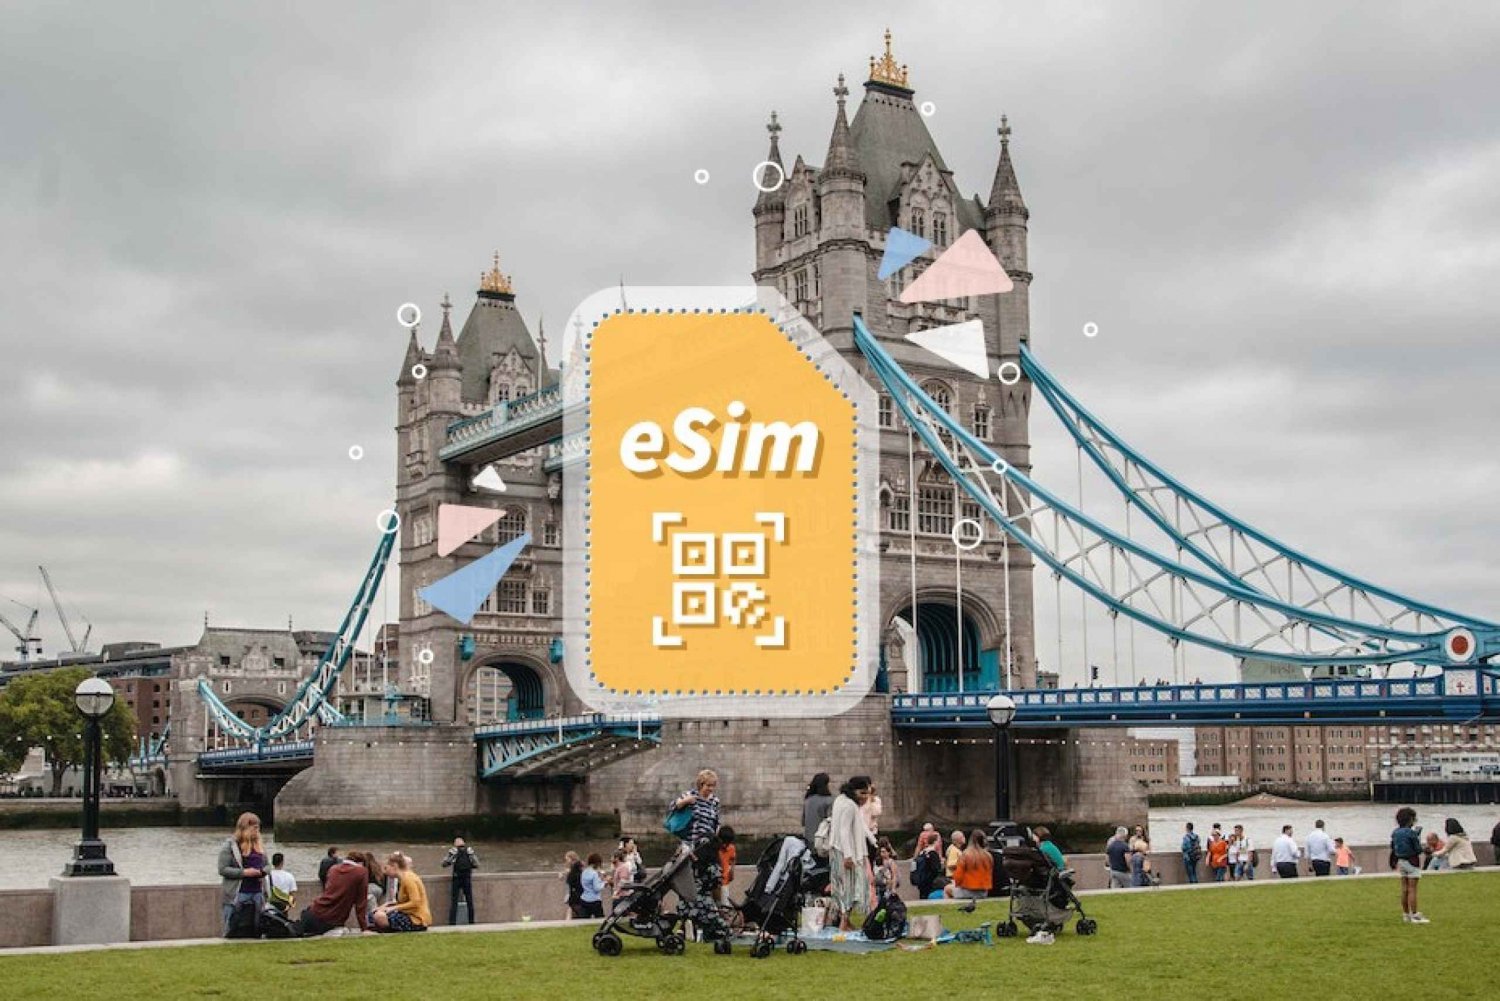 Storbritannia/Europa: 5G eSim Mobile Data Plan